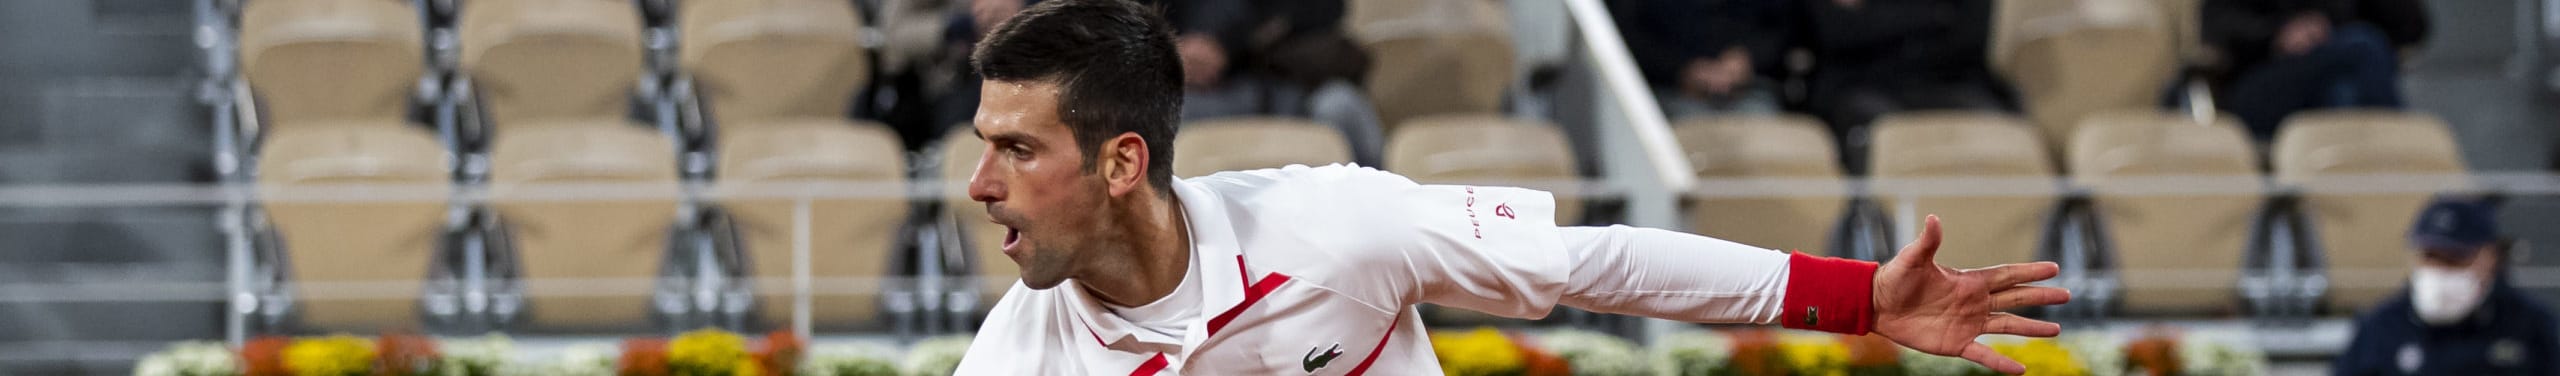 Pronostici e quote Roland Garros 2020: Djokovic e Tsitsipas, partite facili?